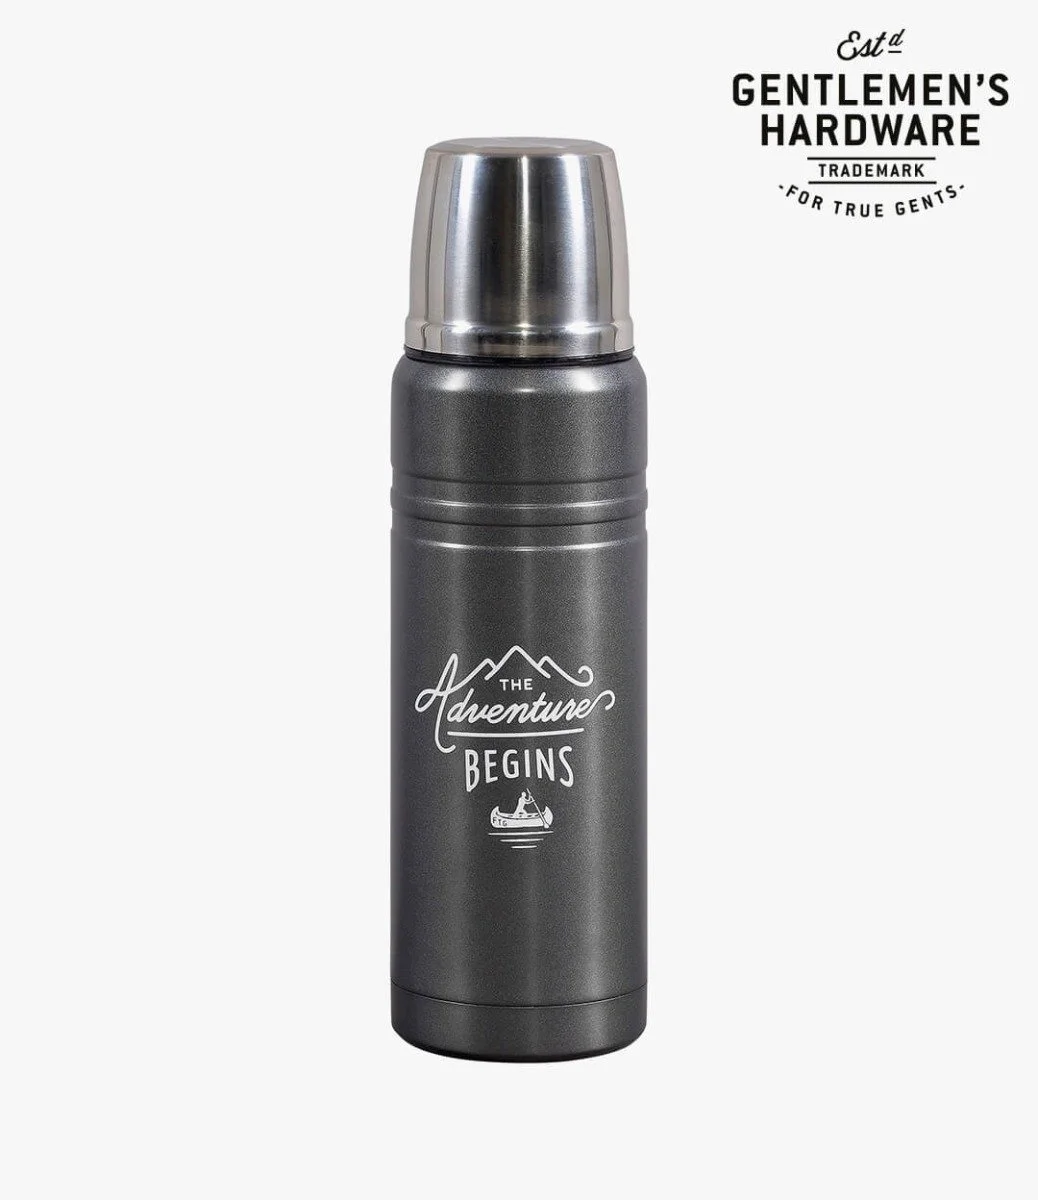 Flask by Gentlemen's Hardware